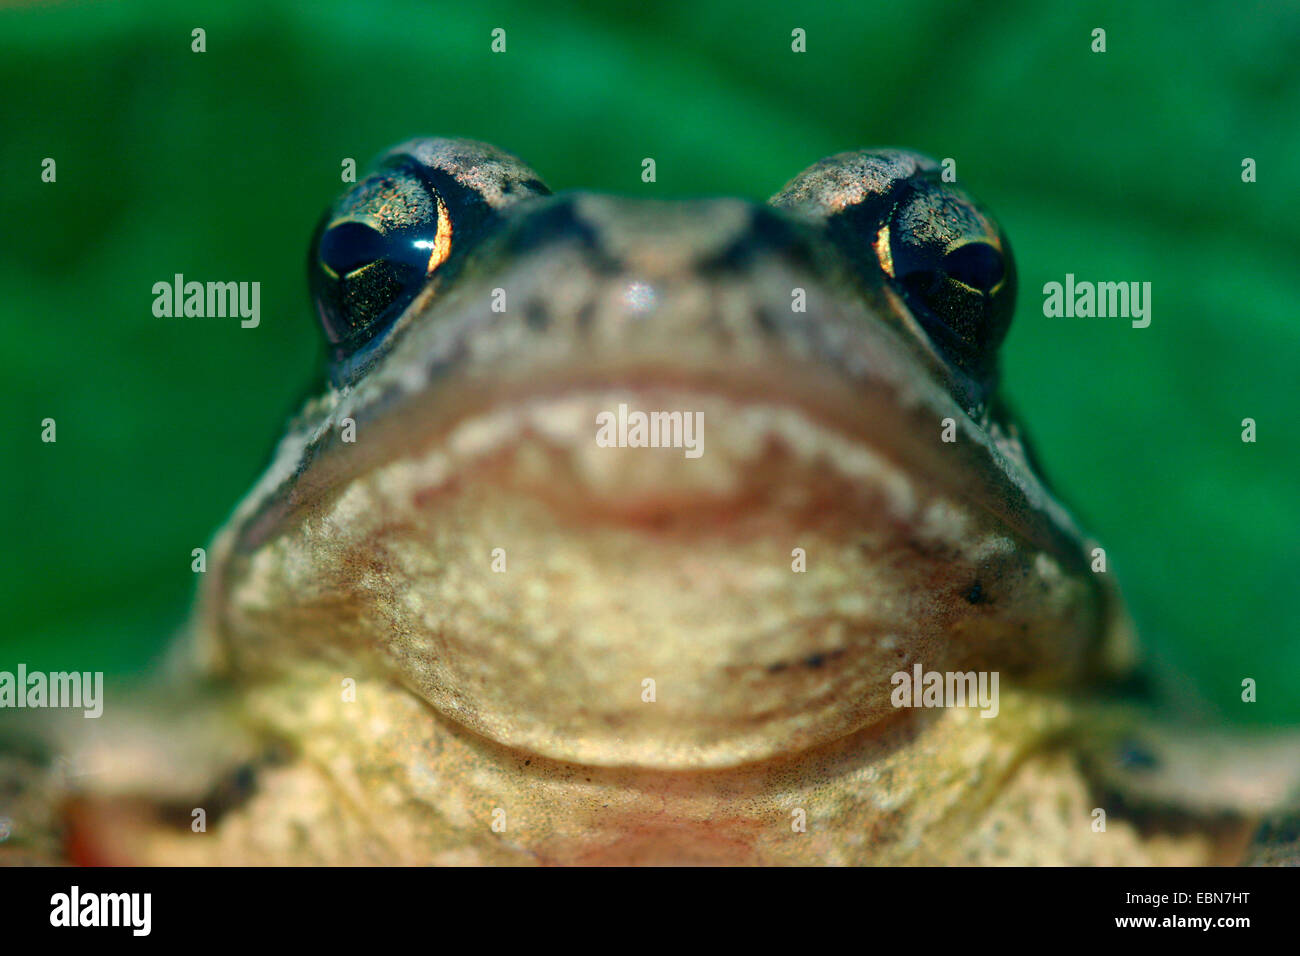 common frog, grass frog (Rana temporaria), portrait, Germany Stock Photo